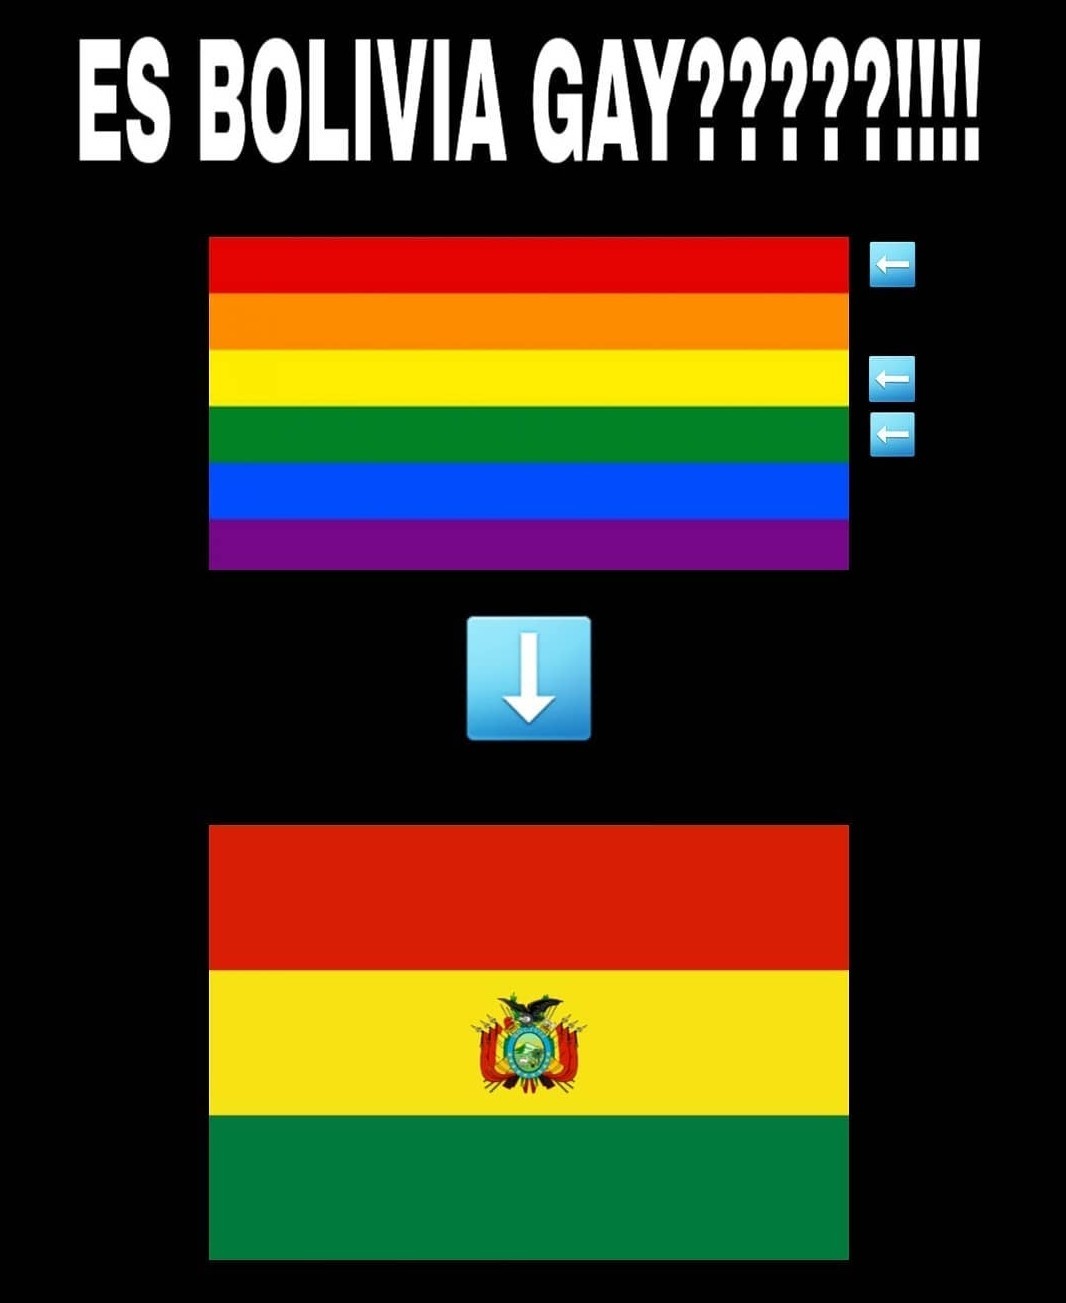 Bolivia hay Bolivia gay - meme